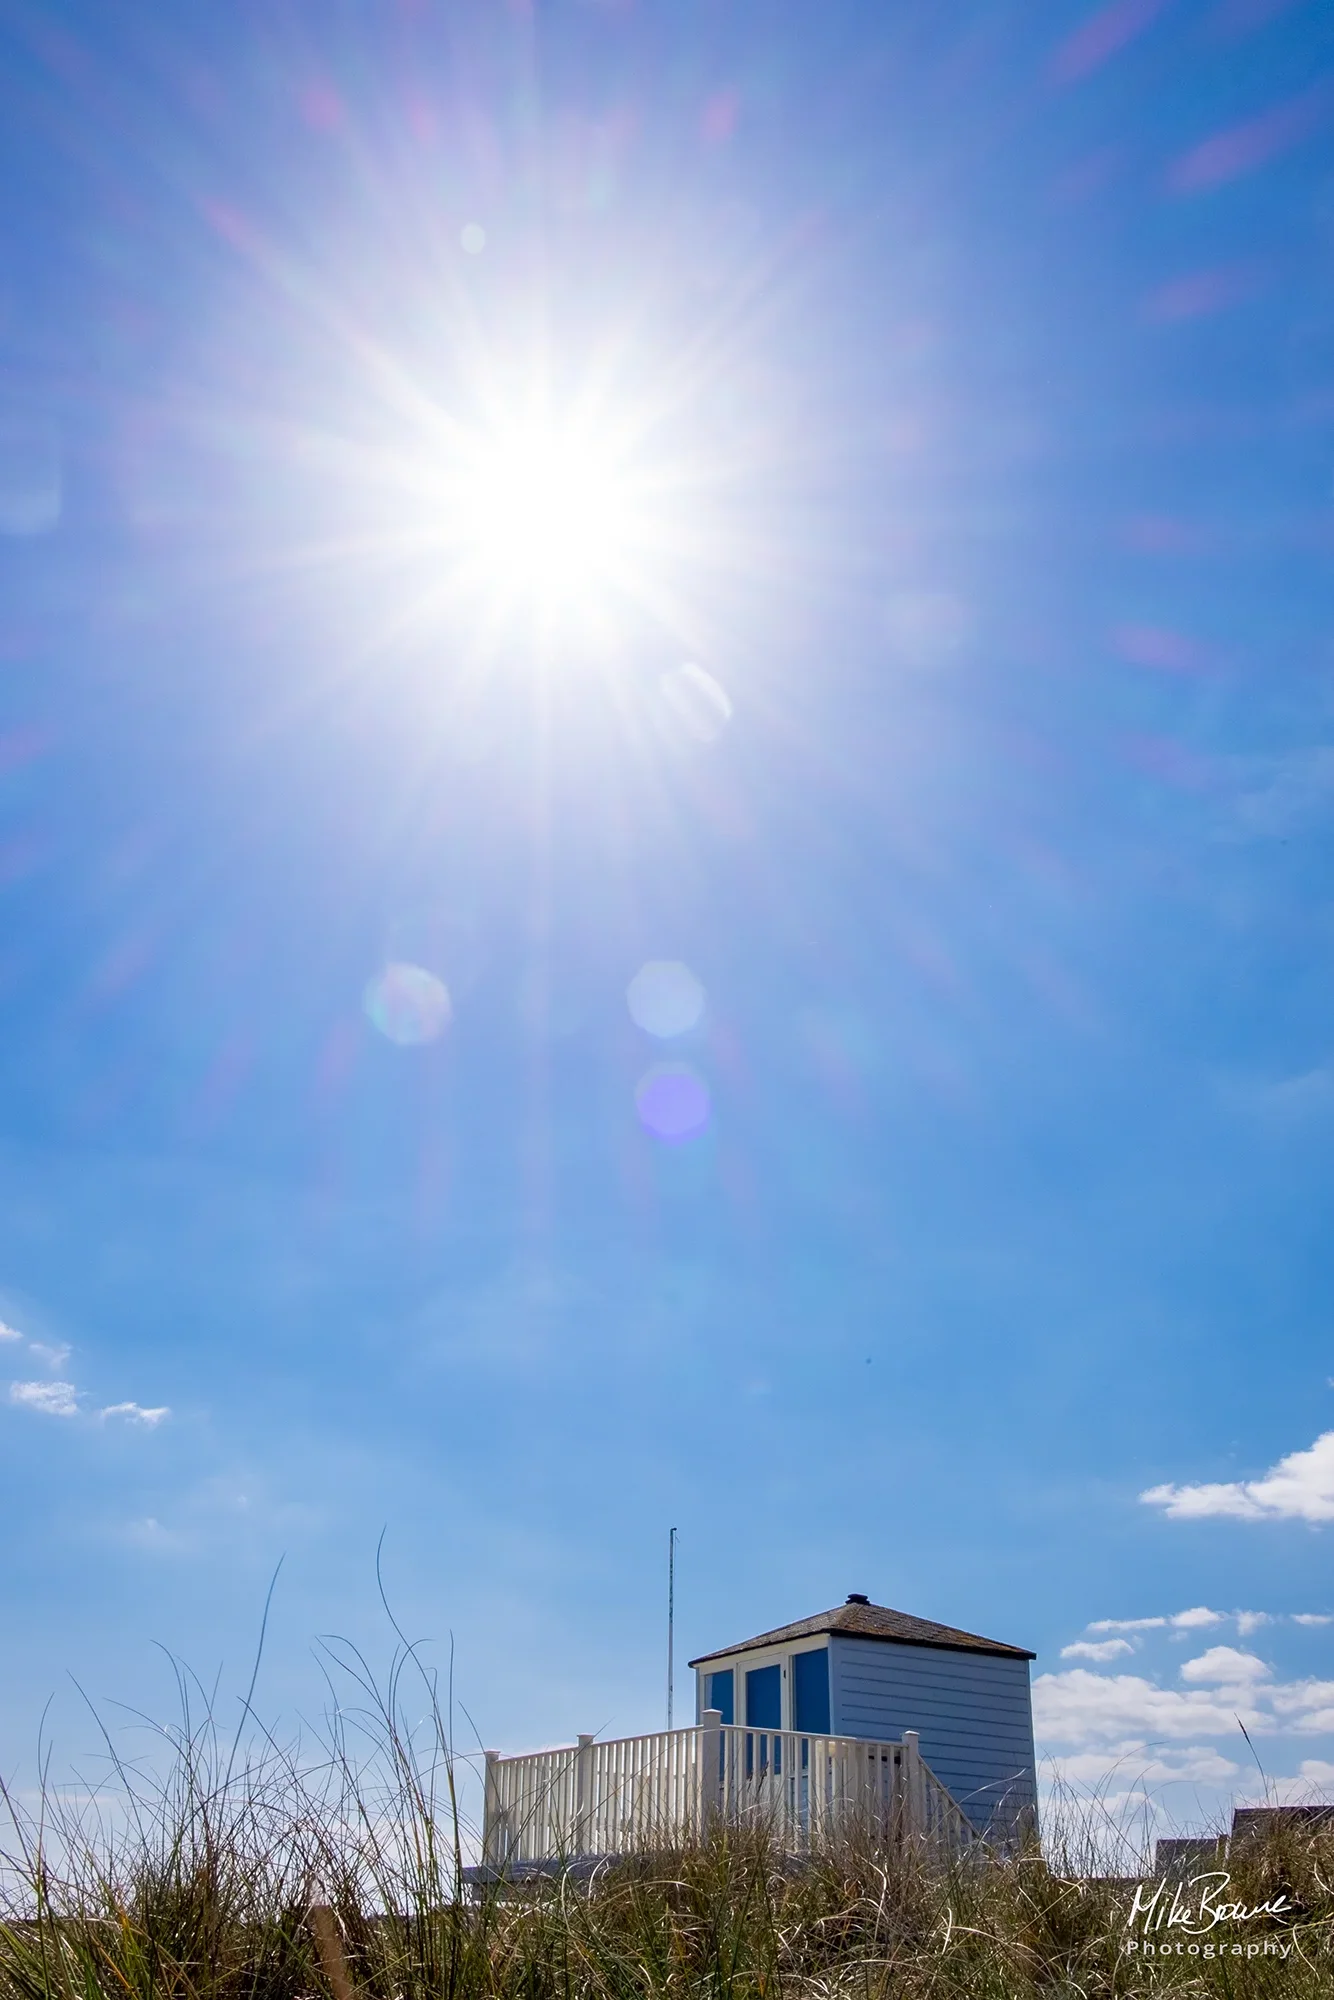 Single British beach hut with sun shining in a blue sky